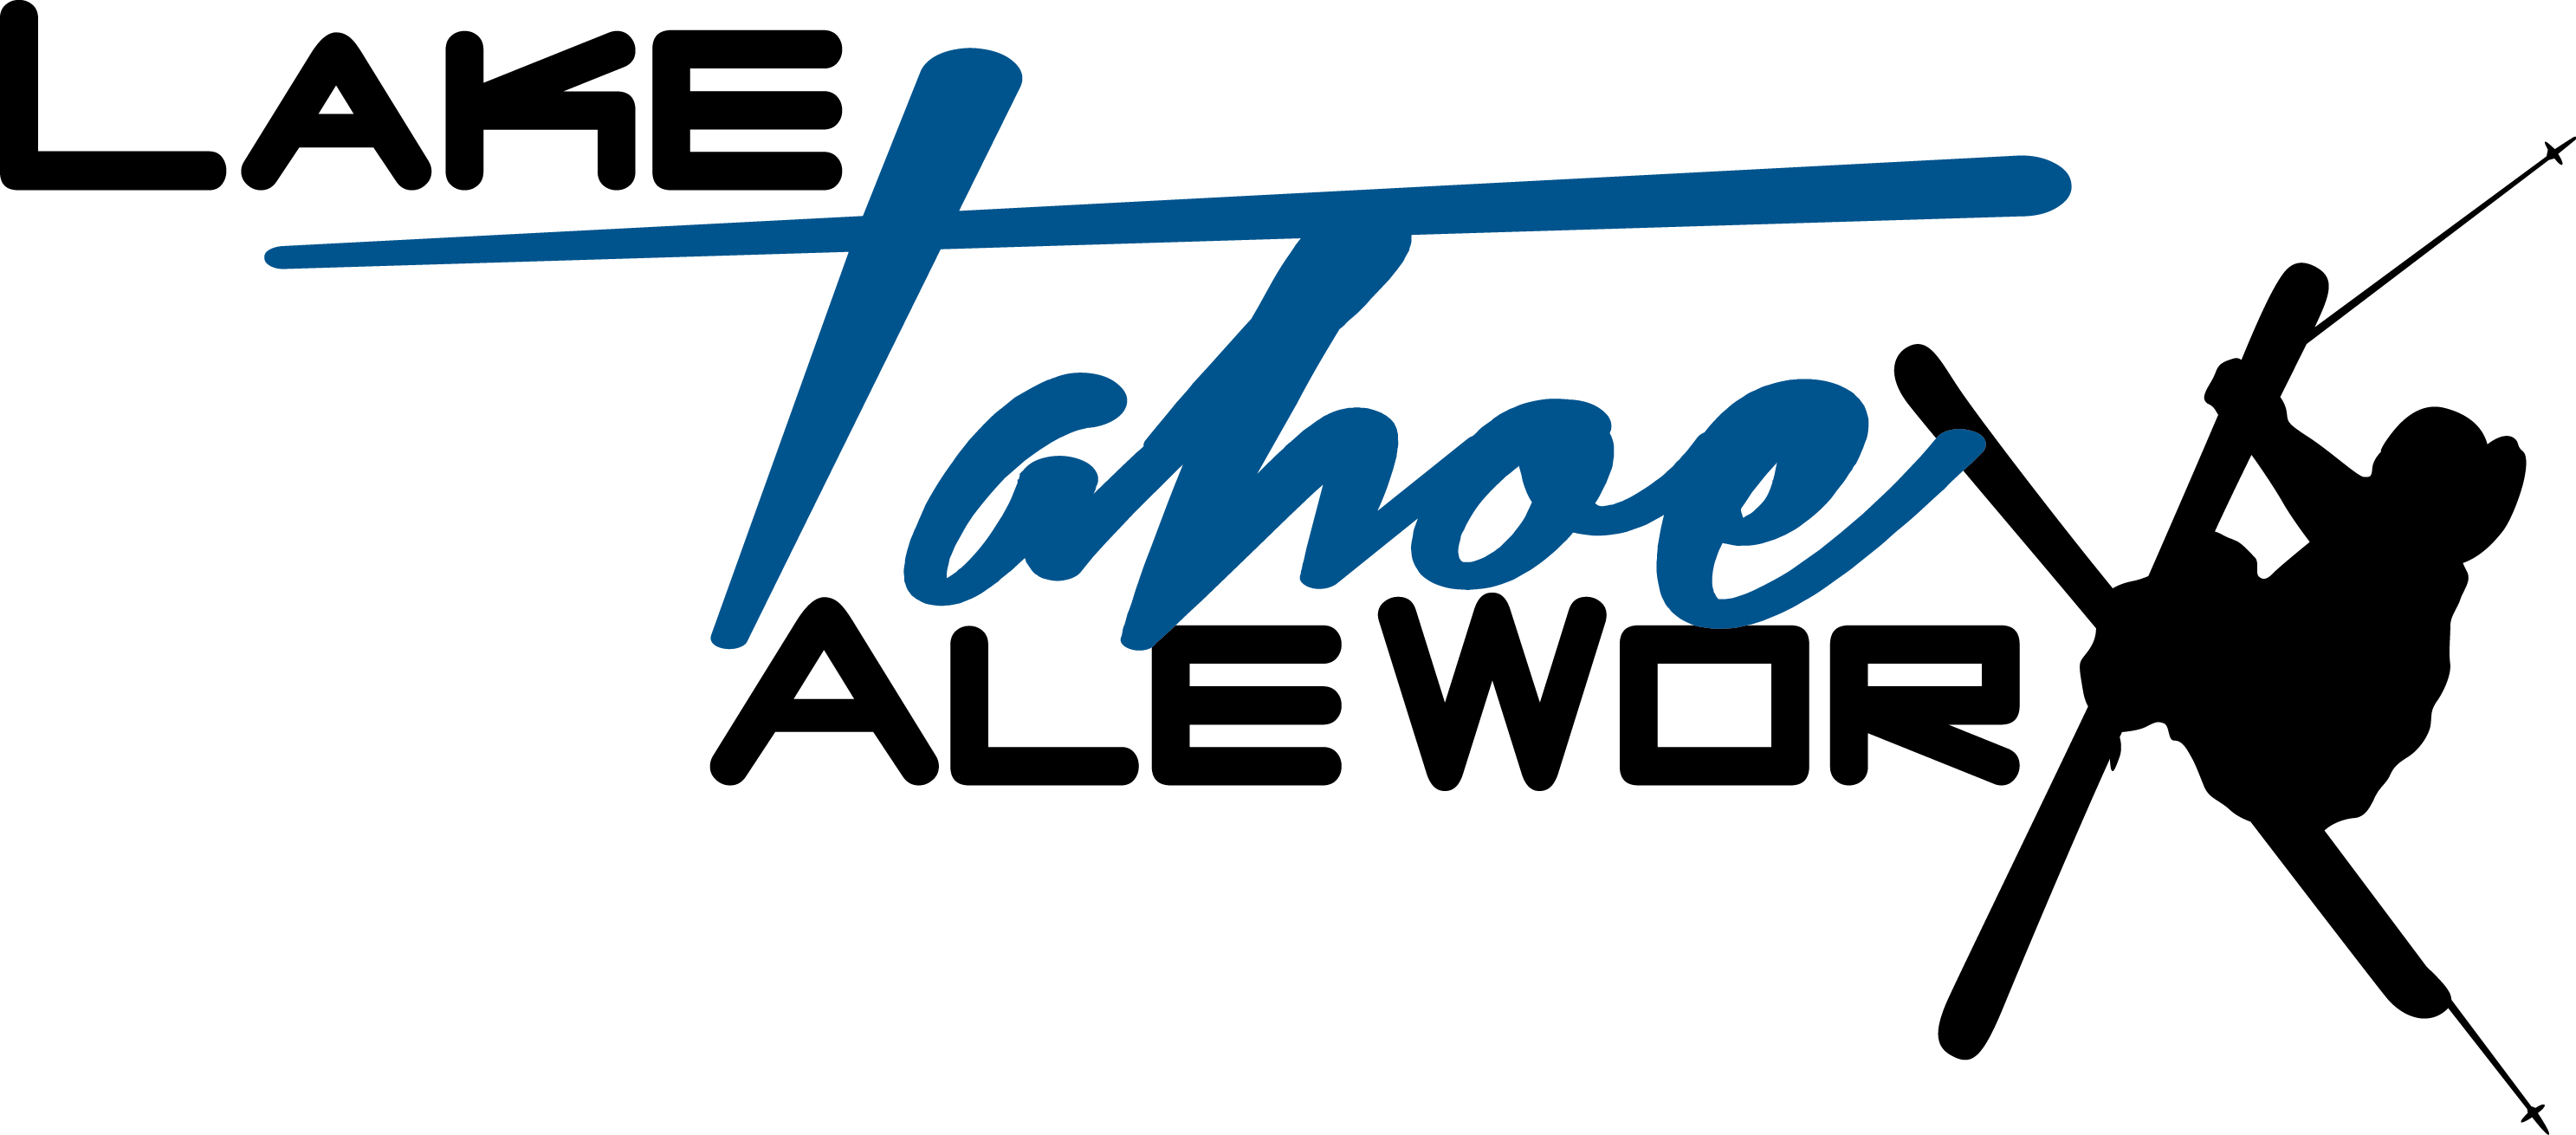 Lake Tahoe Ale Worx